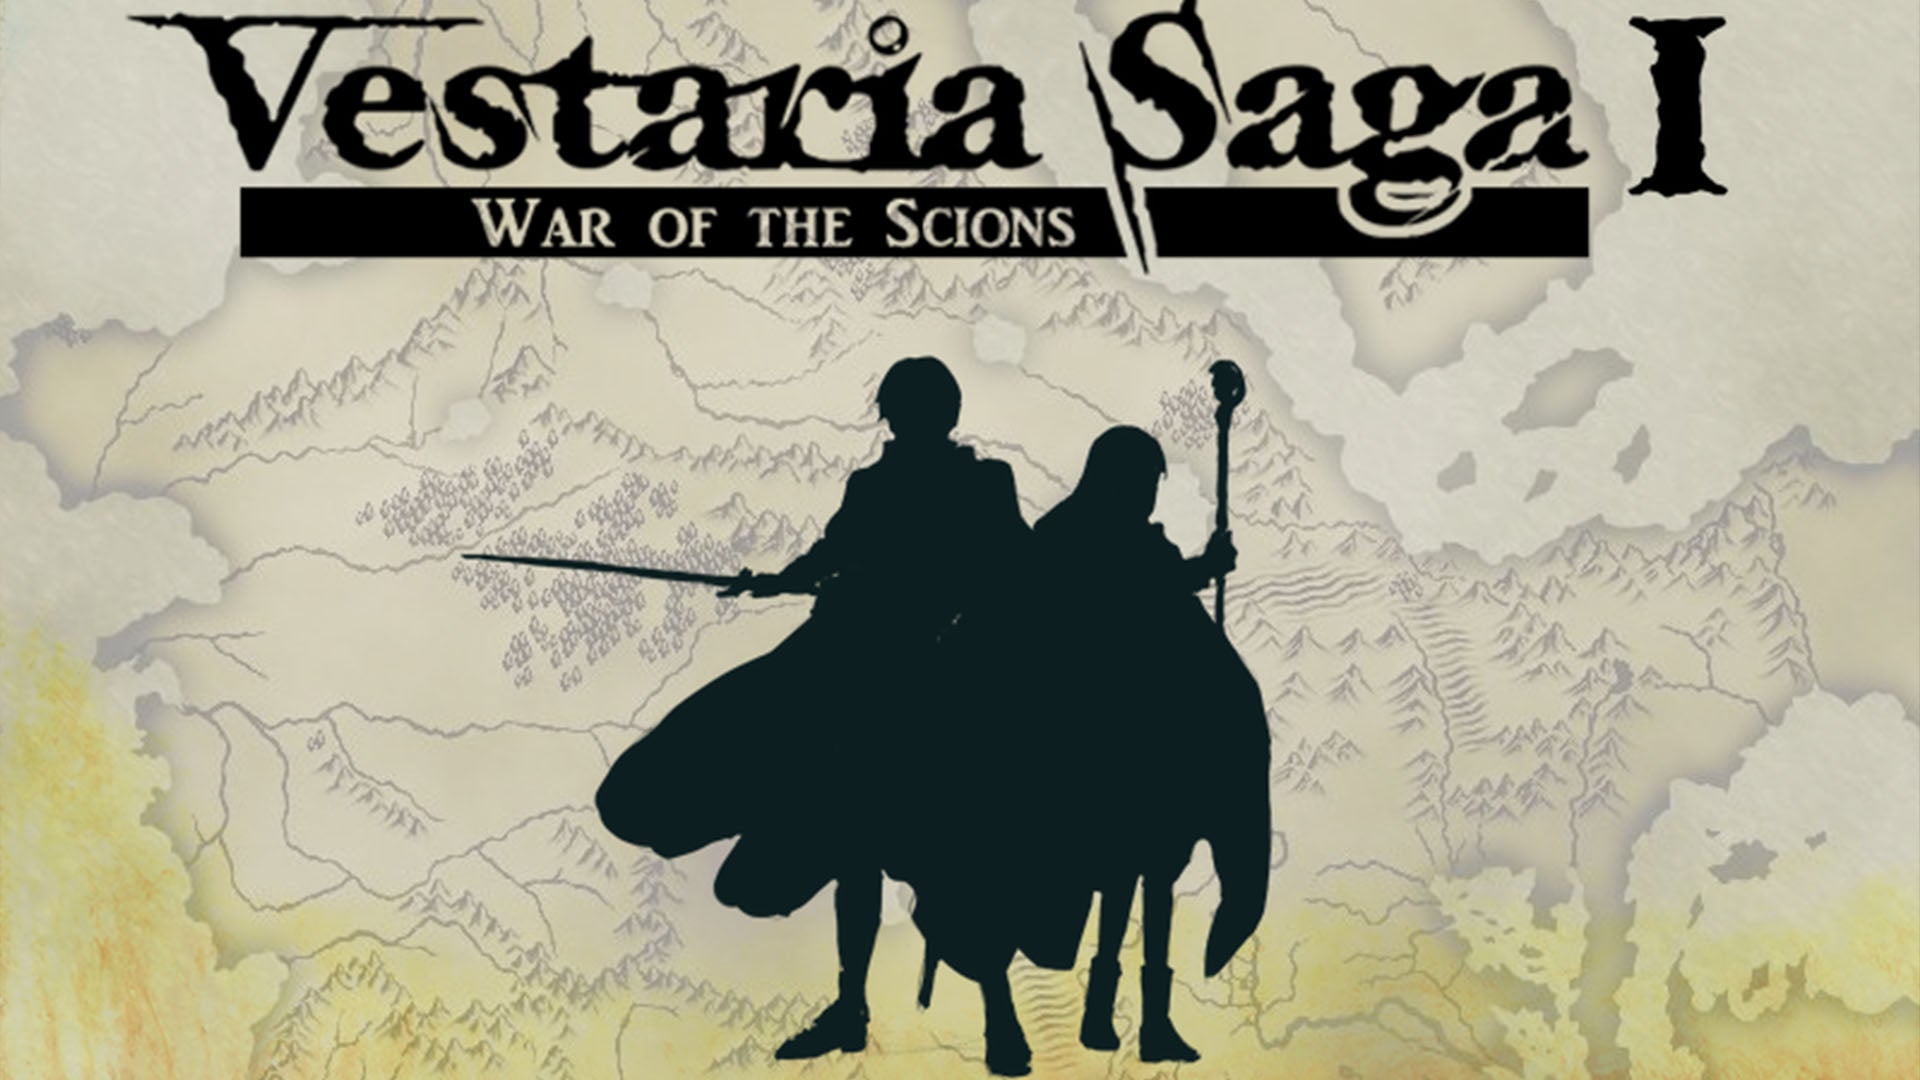 Image for Wot I think - Vestaria Saga I: War of the Scions